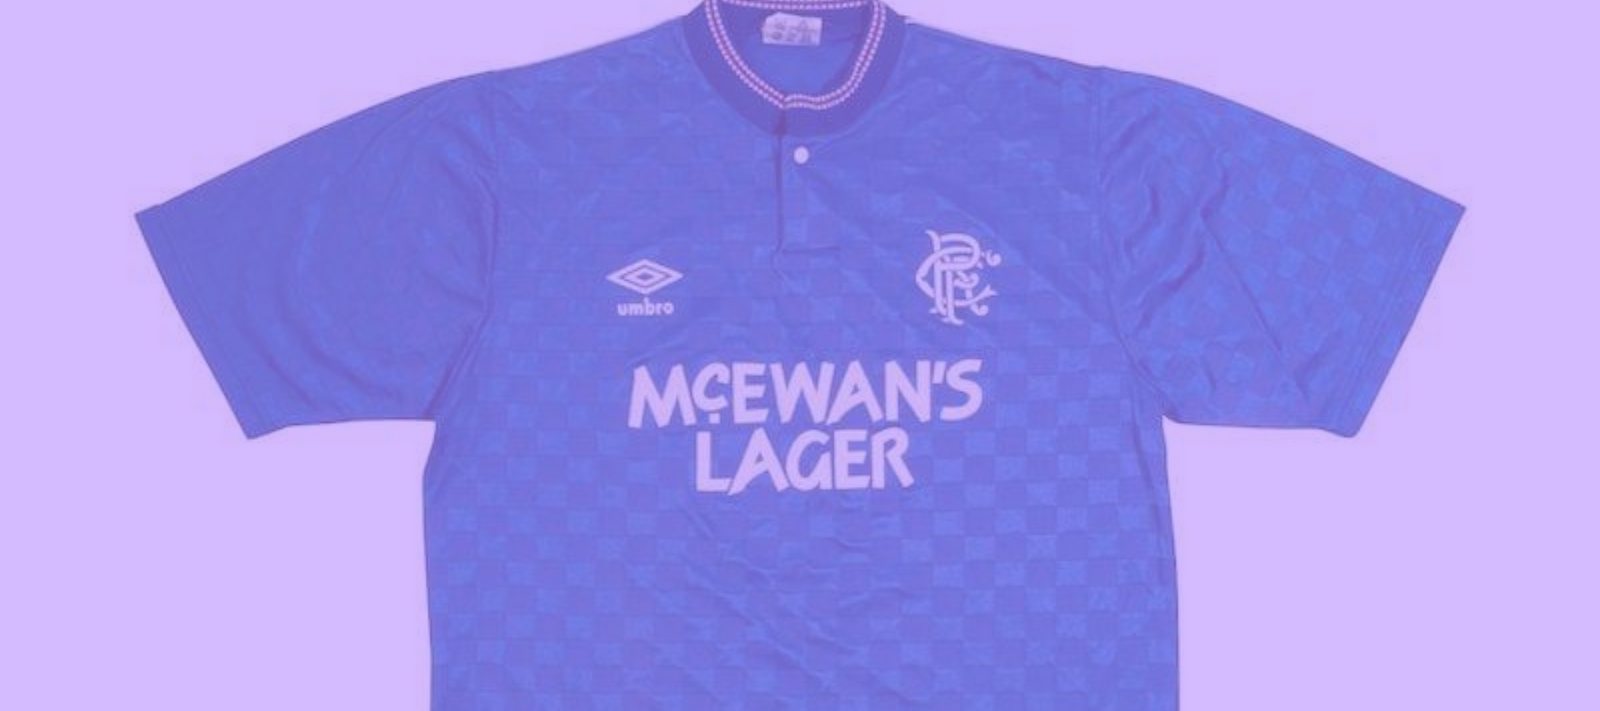 Celtic Glasgow retro soccer jersey 87-88